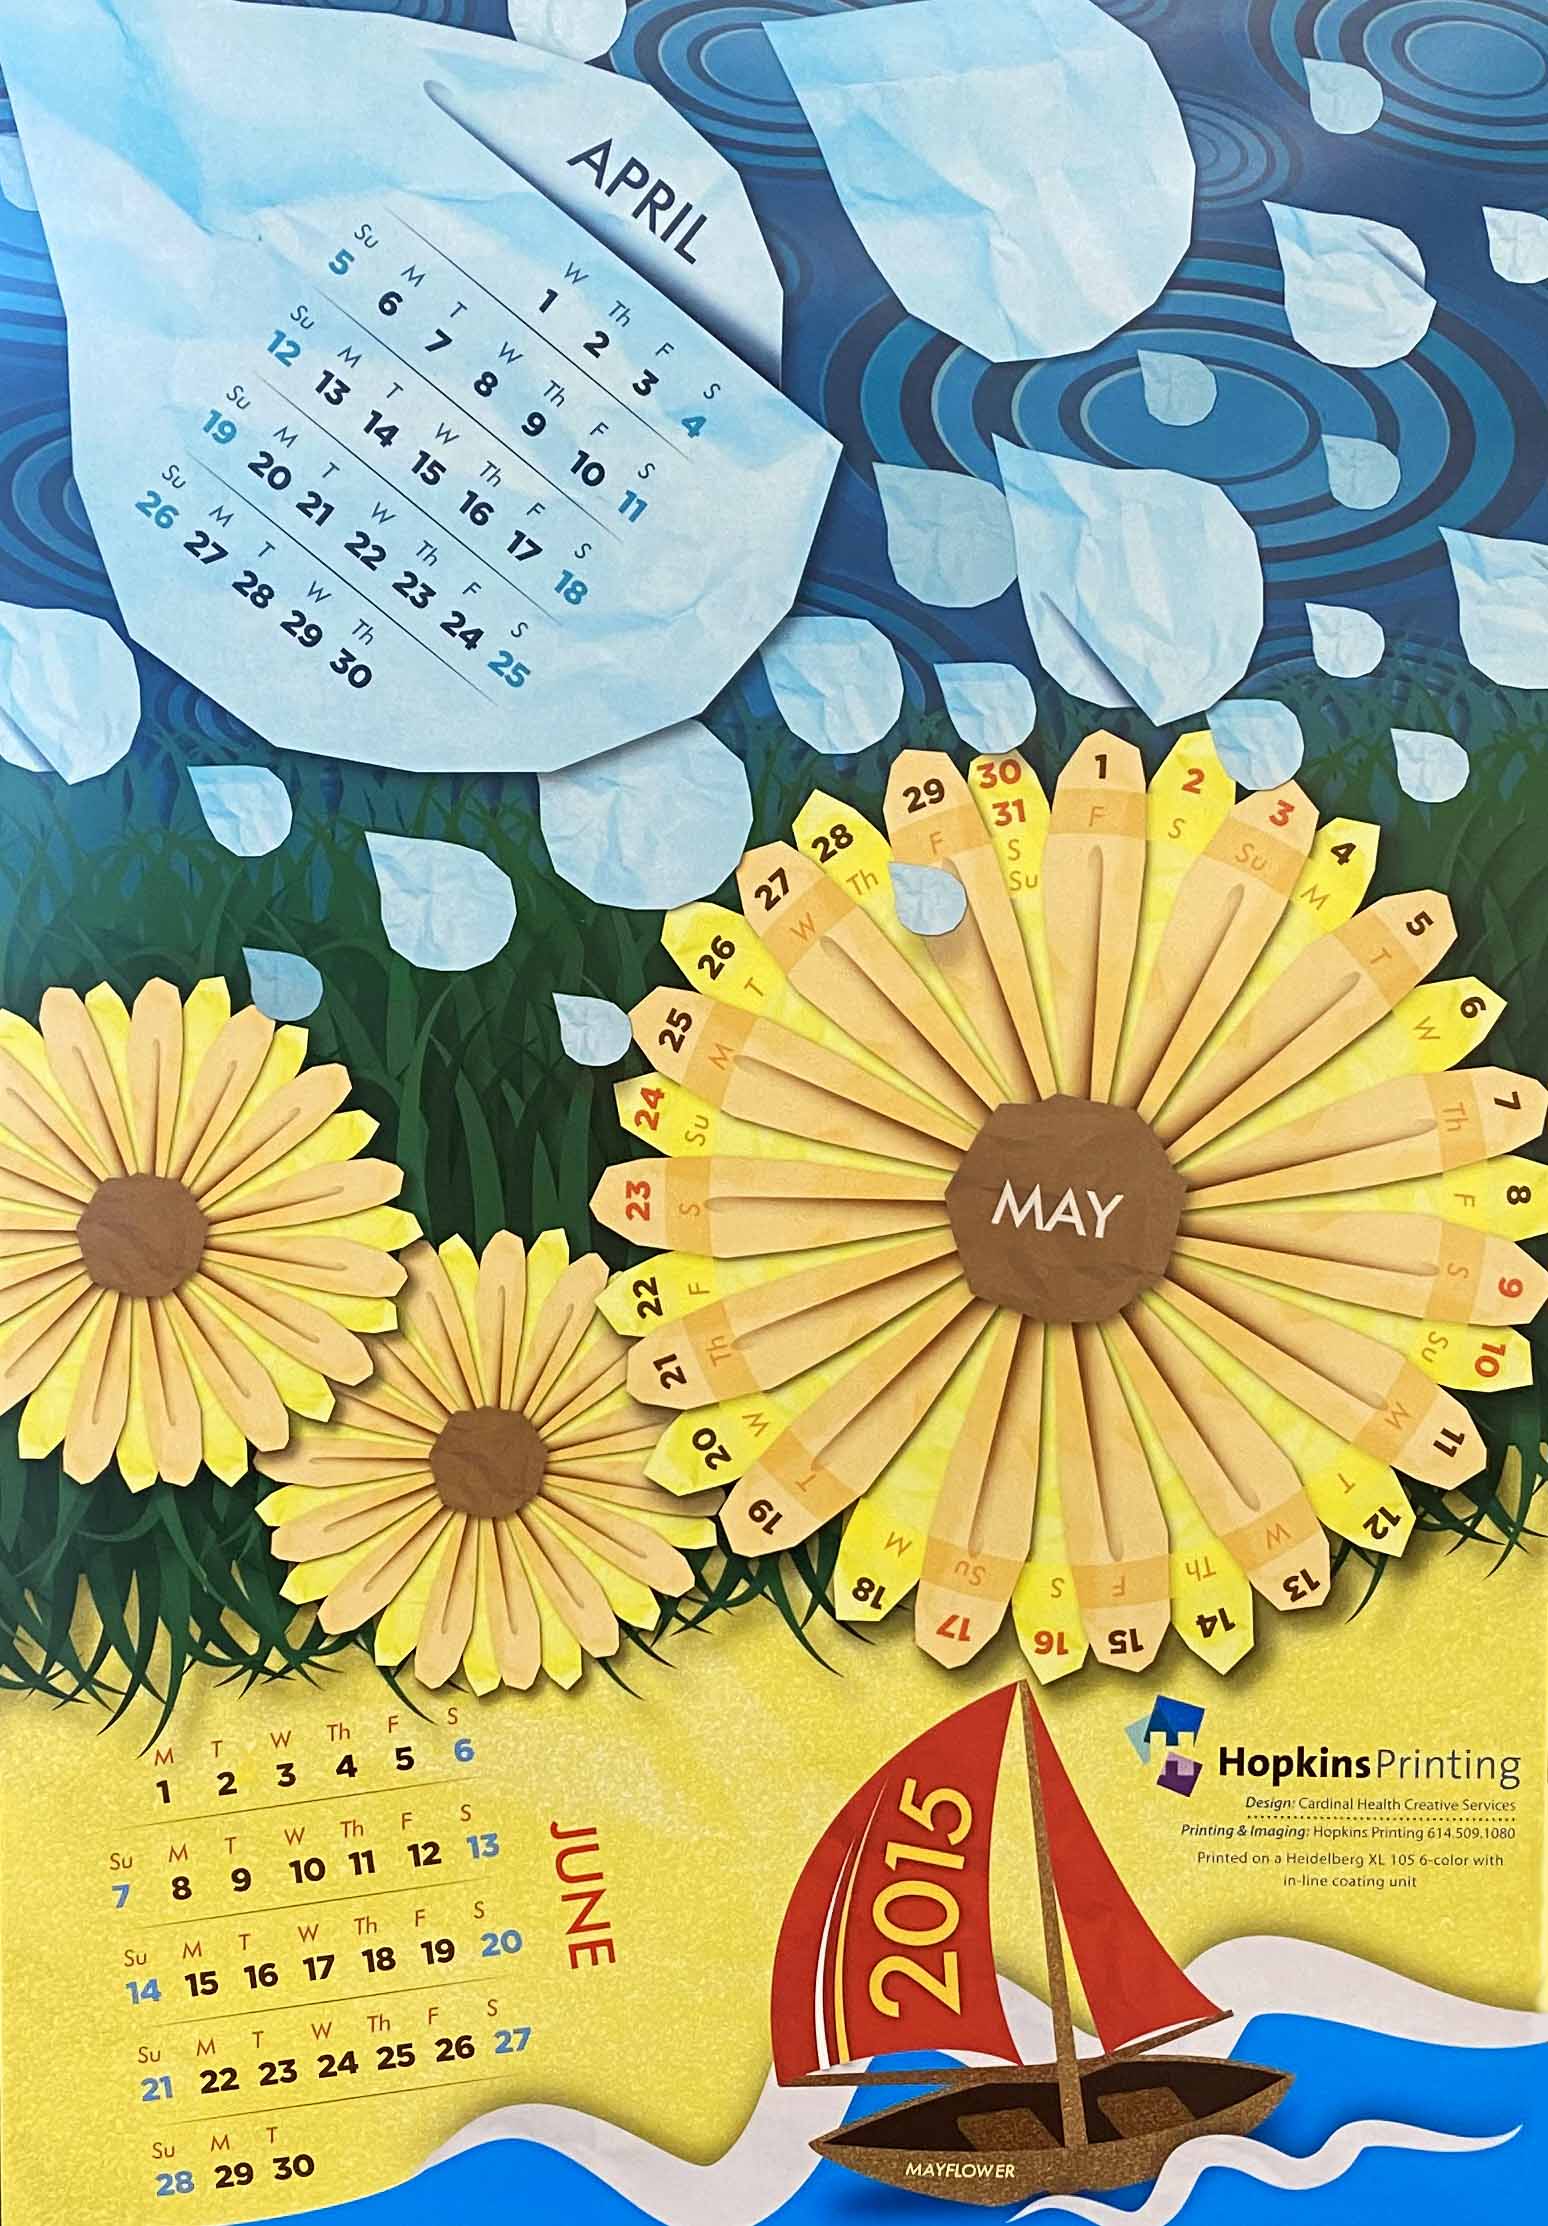 hopkins-spring-calendars-through-the-years-hopkins-printing-central-ohio-printer